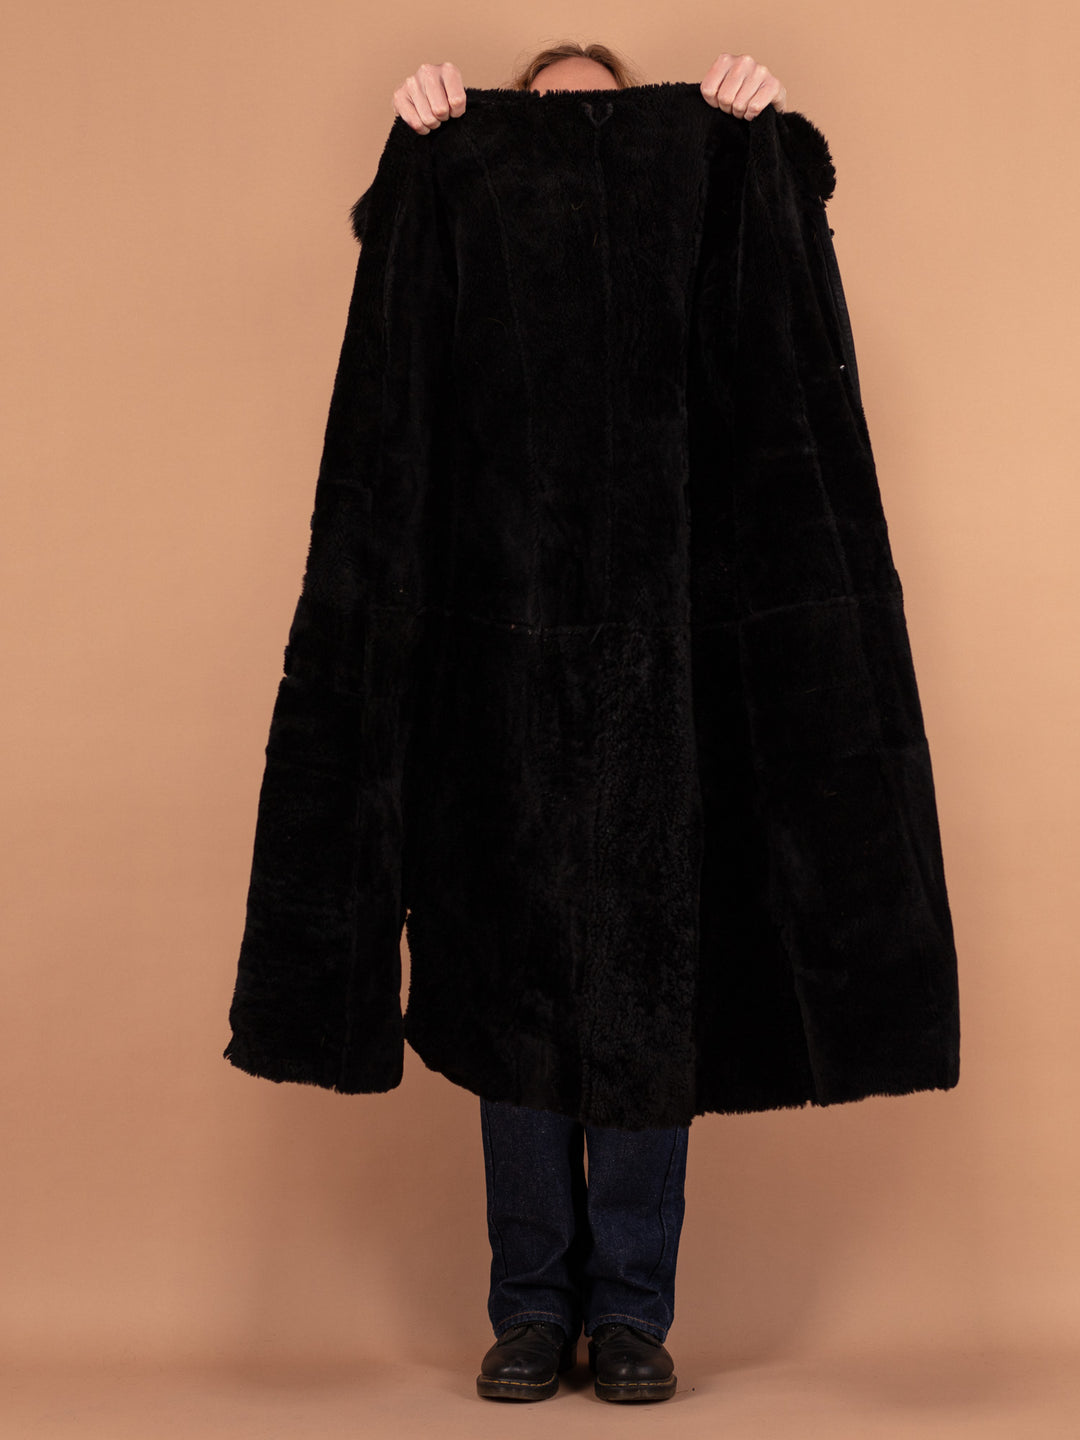 Sheepskin Long Coat 80s, Size Small S Shearling Coat, Black Sheepskin Overcoat, Hooded Sheepskin Coat, Penny Lane, Hippie Boho Outerwear